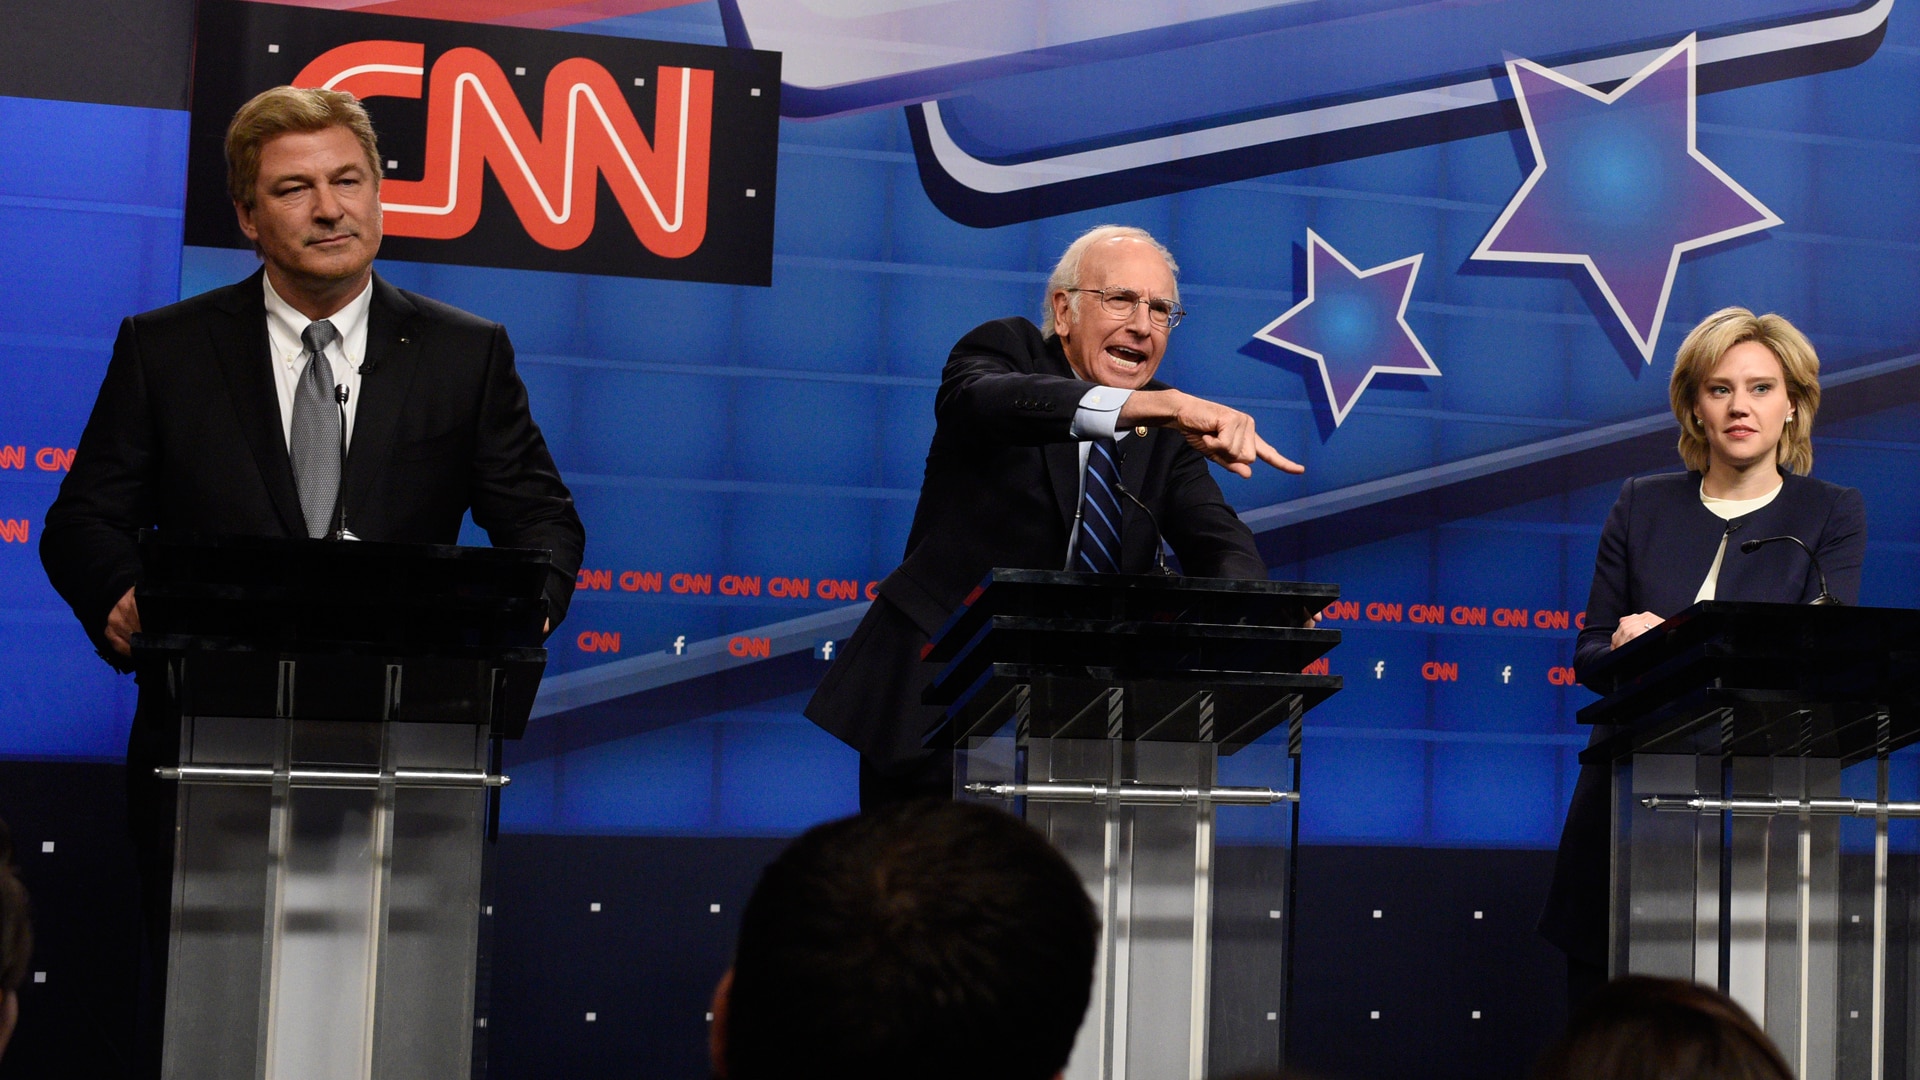 Watch Saturday Night Live Highlight: Democratic Debate Cold Open - NBC.com1920 x 1080